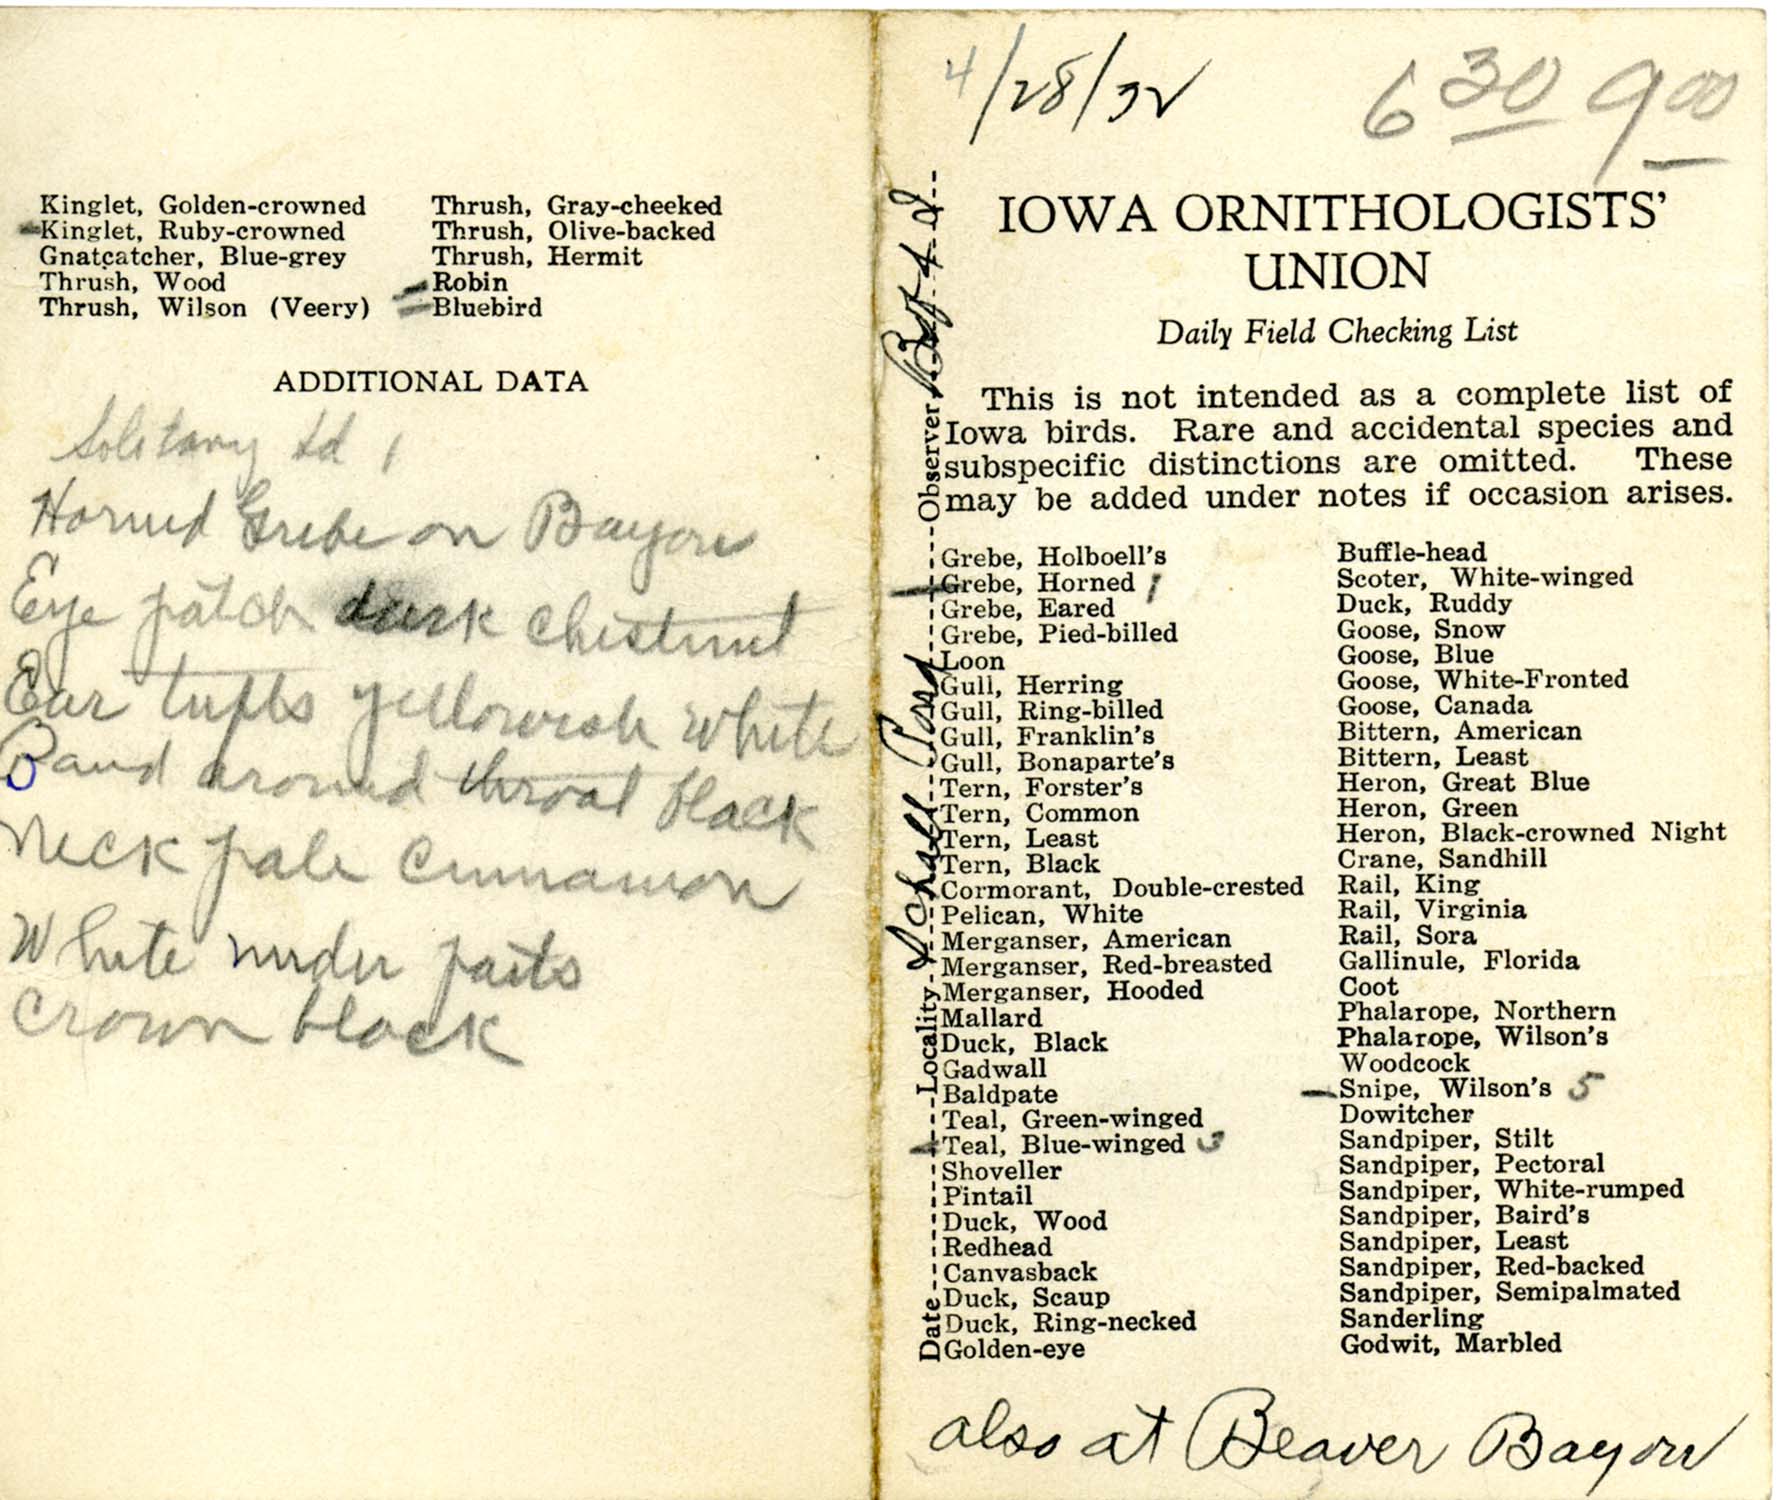 Daily field checking list, Walter Rosene, April 28, 1932